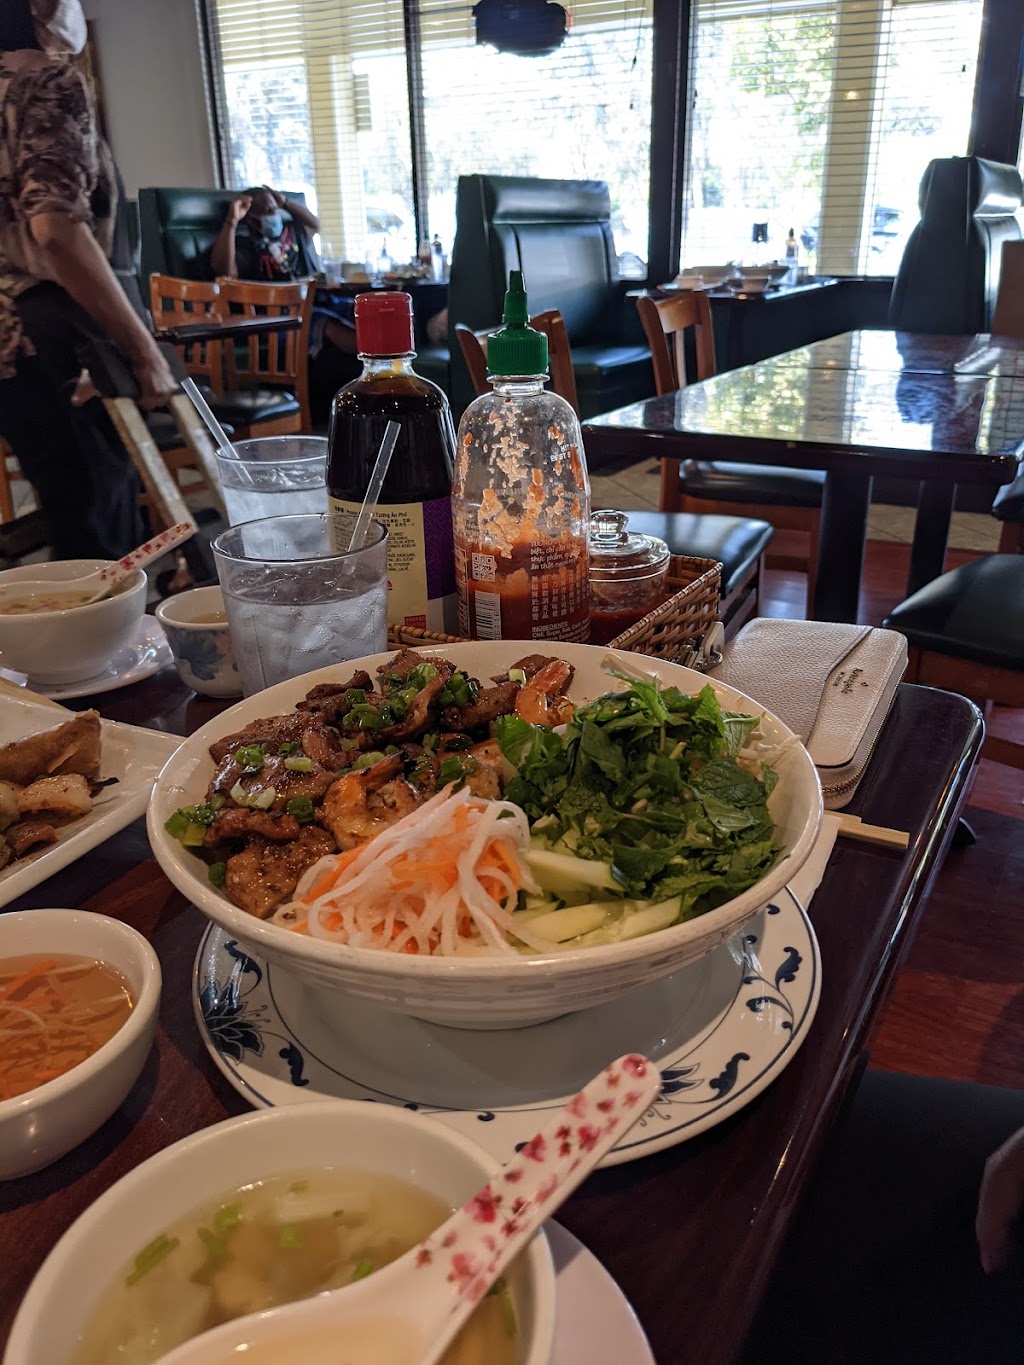 My Tho Vietnamese Restaurant | 39127 Cedar Blvd, Newark, CA 94560 | Phone: (510) 794-5932